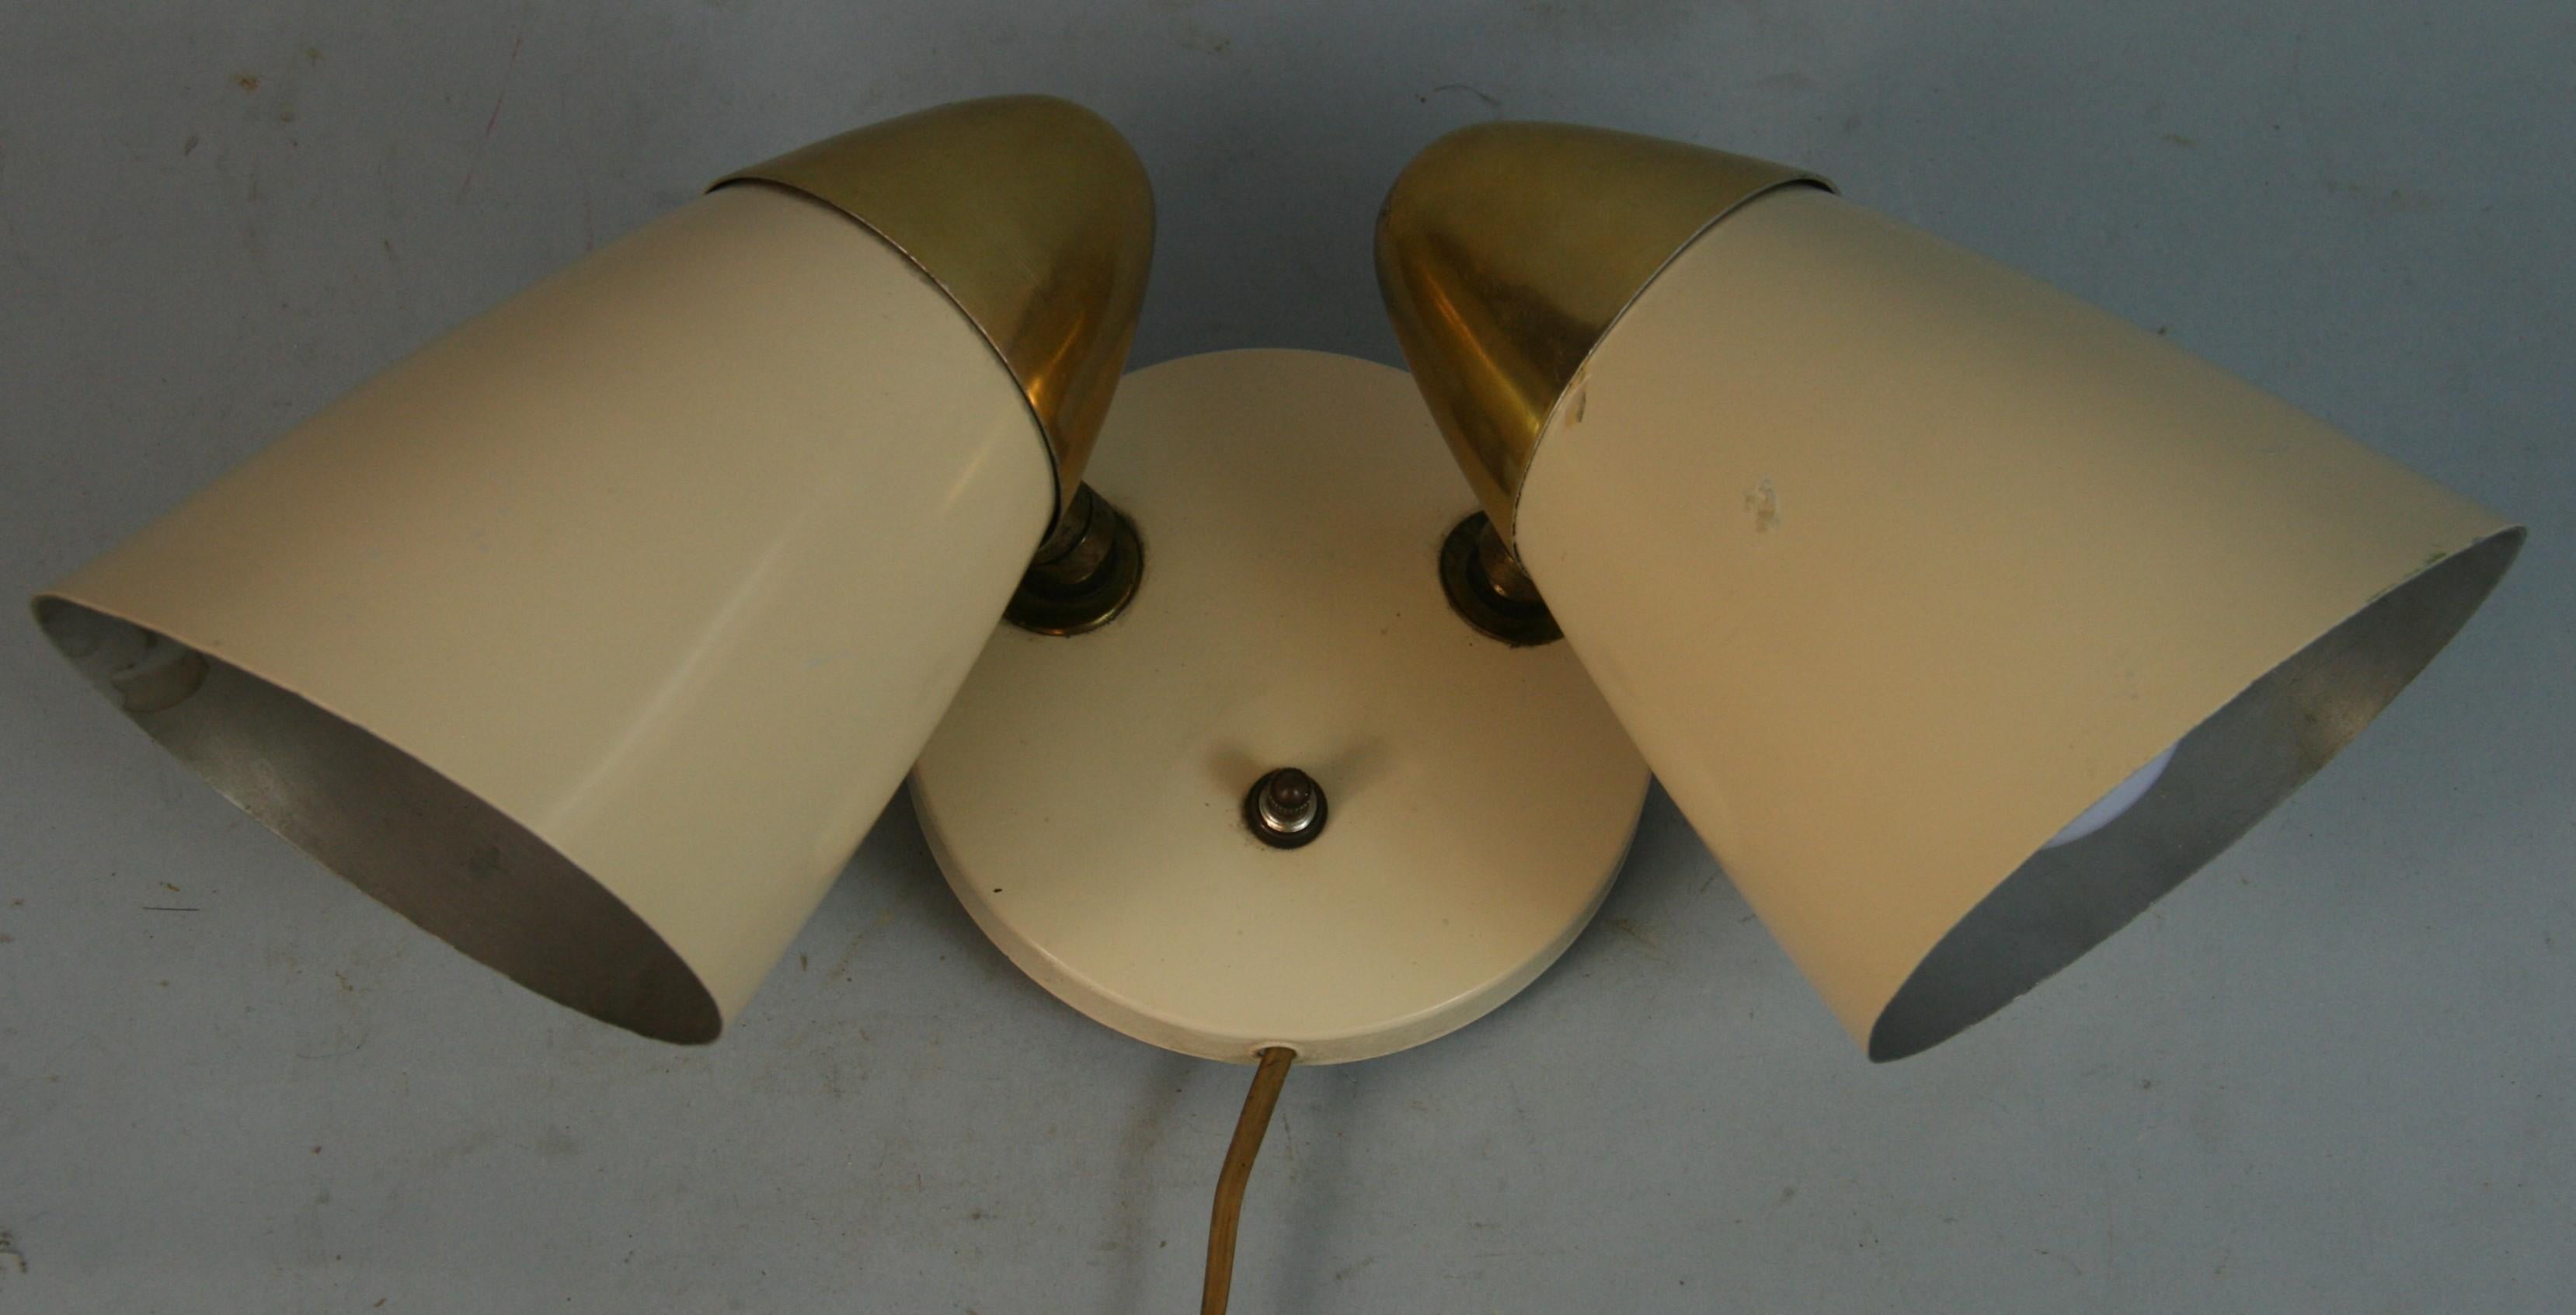 1567 Single double light swivel cone sconce 
Takes 60 watt Edison based bulb